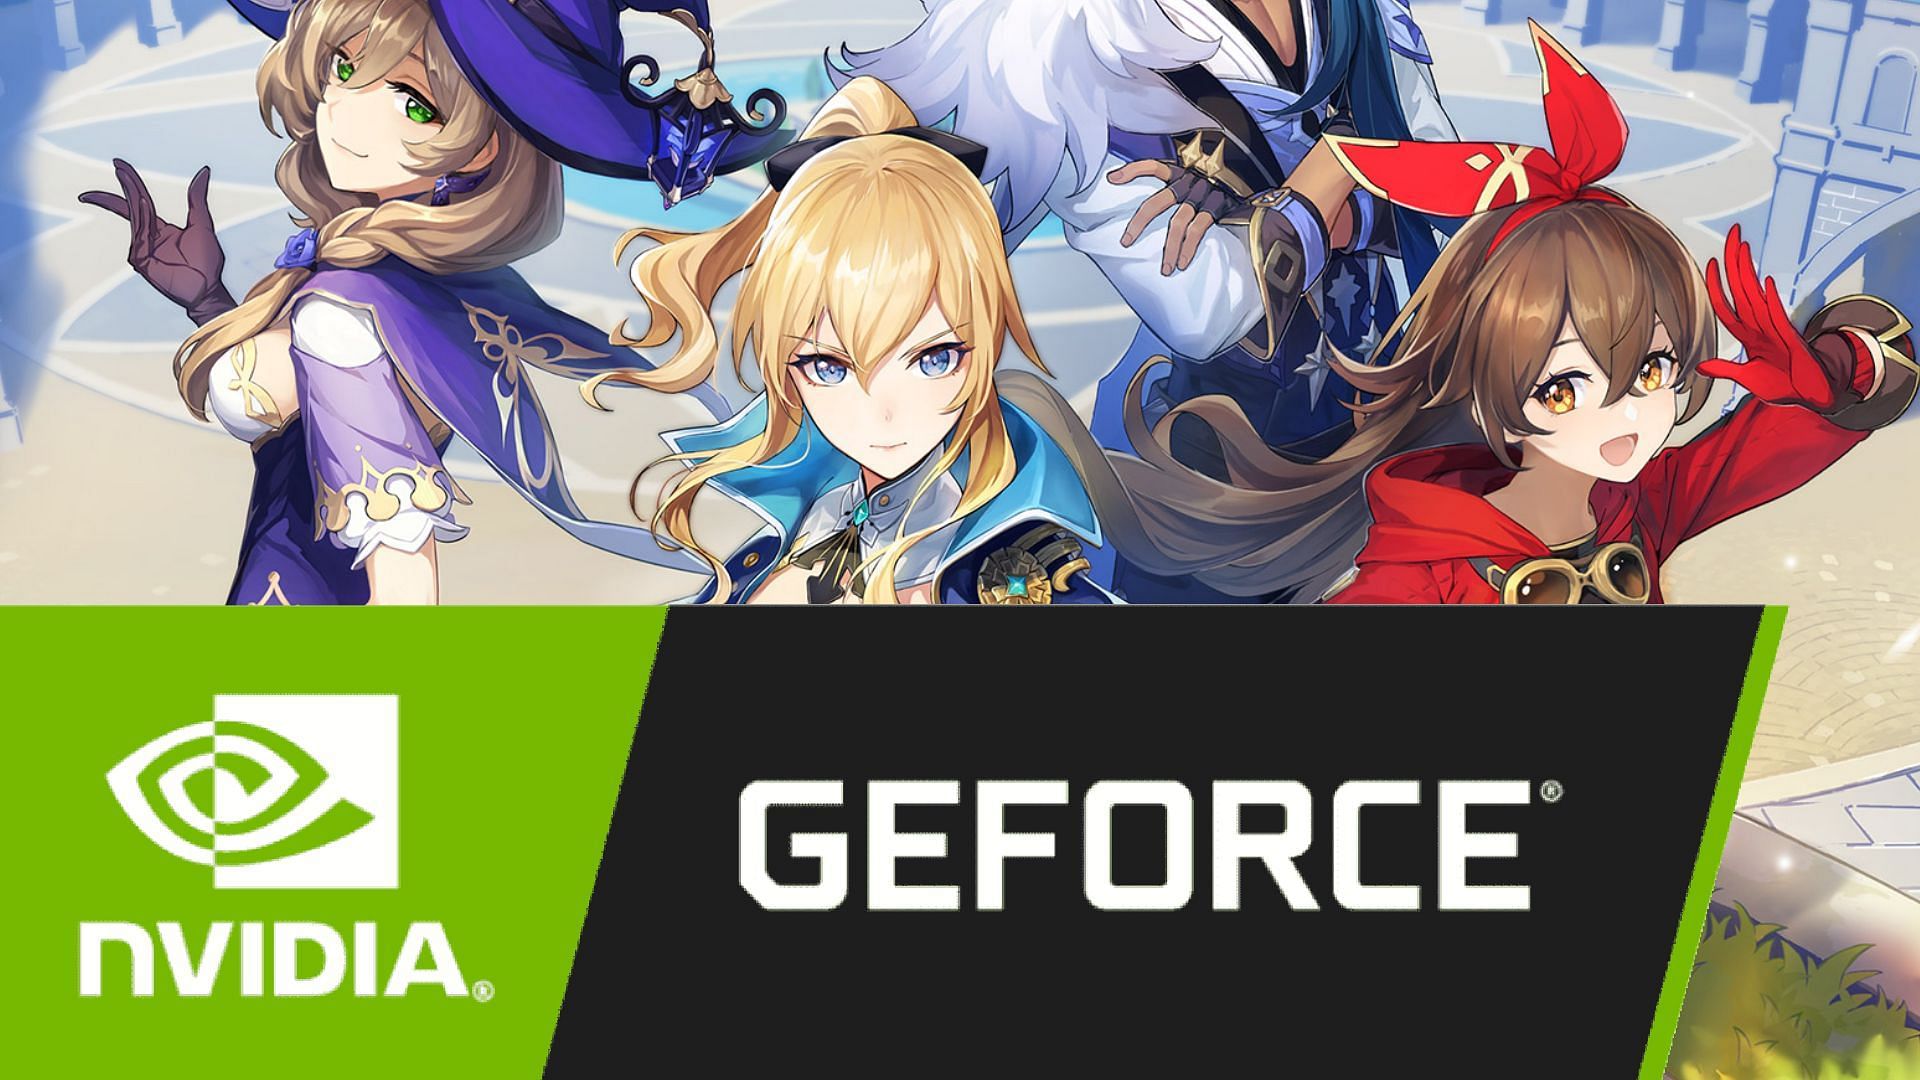 Genshin Impact on GeForce NOW Launch FAQs